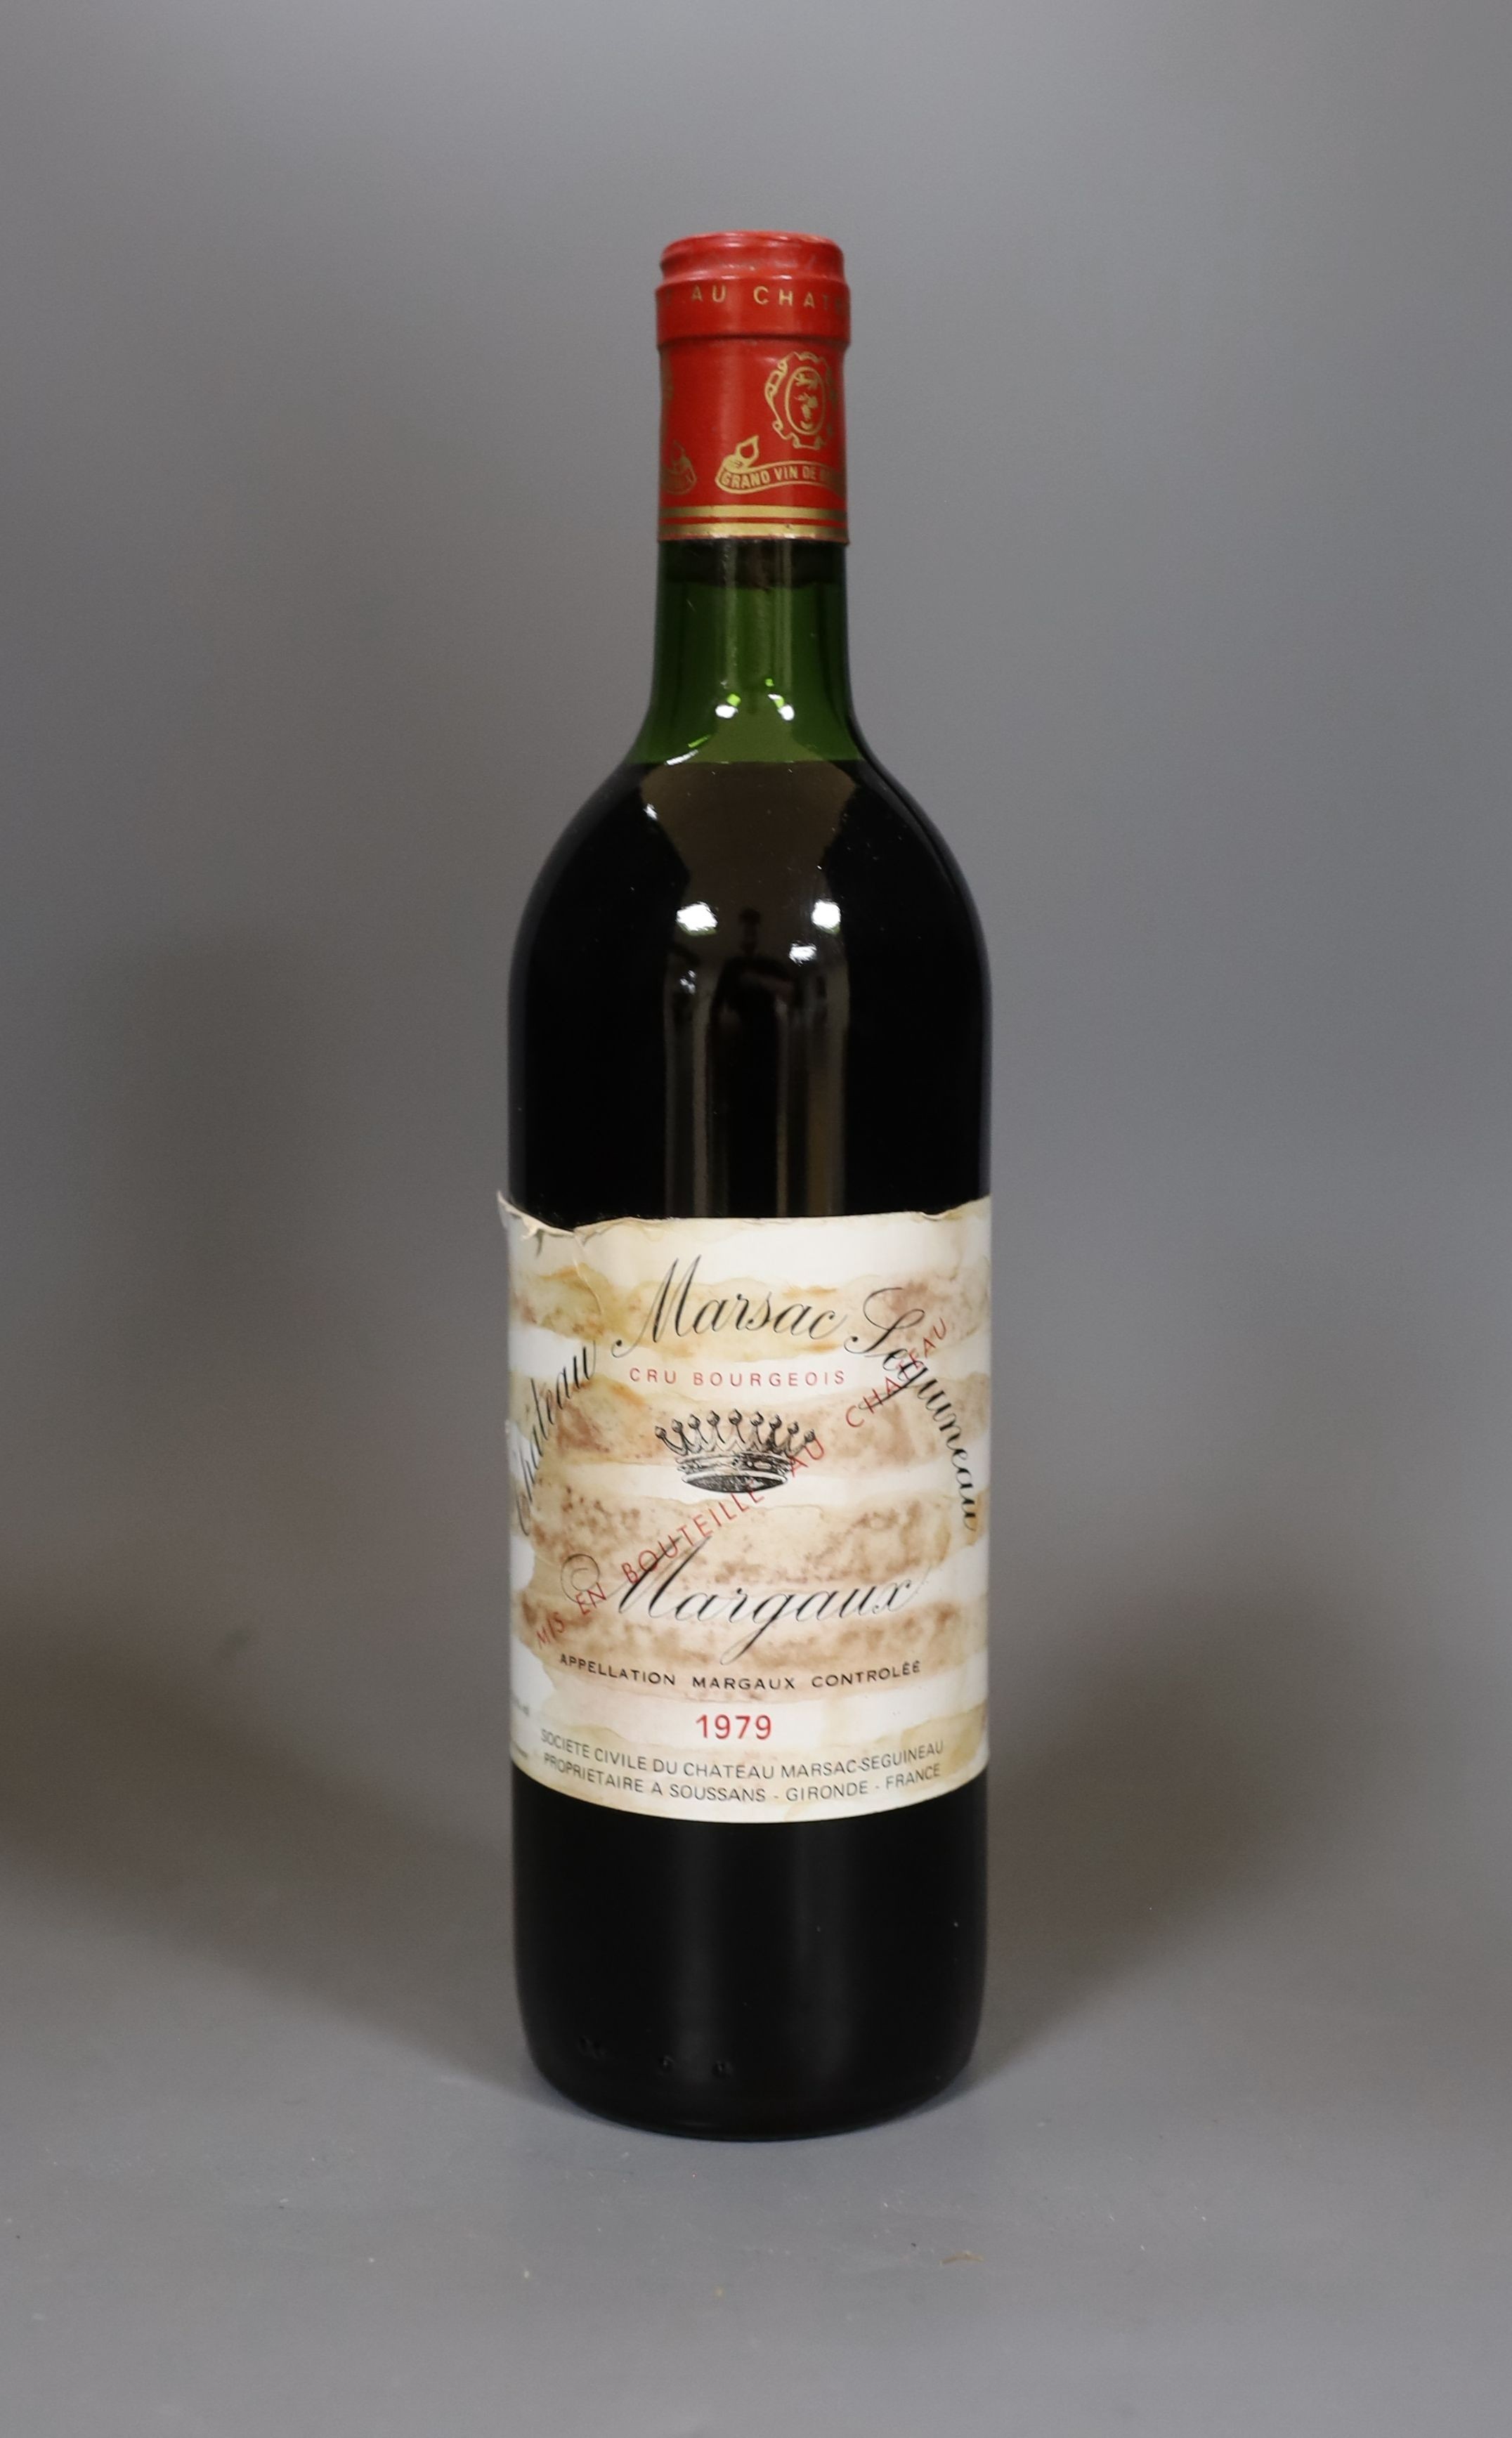 Six bottles of Chateau Marsac Seguineau - Margaux 1979 75cl